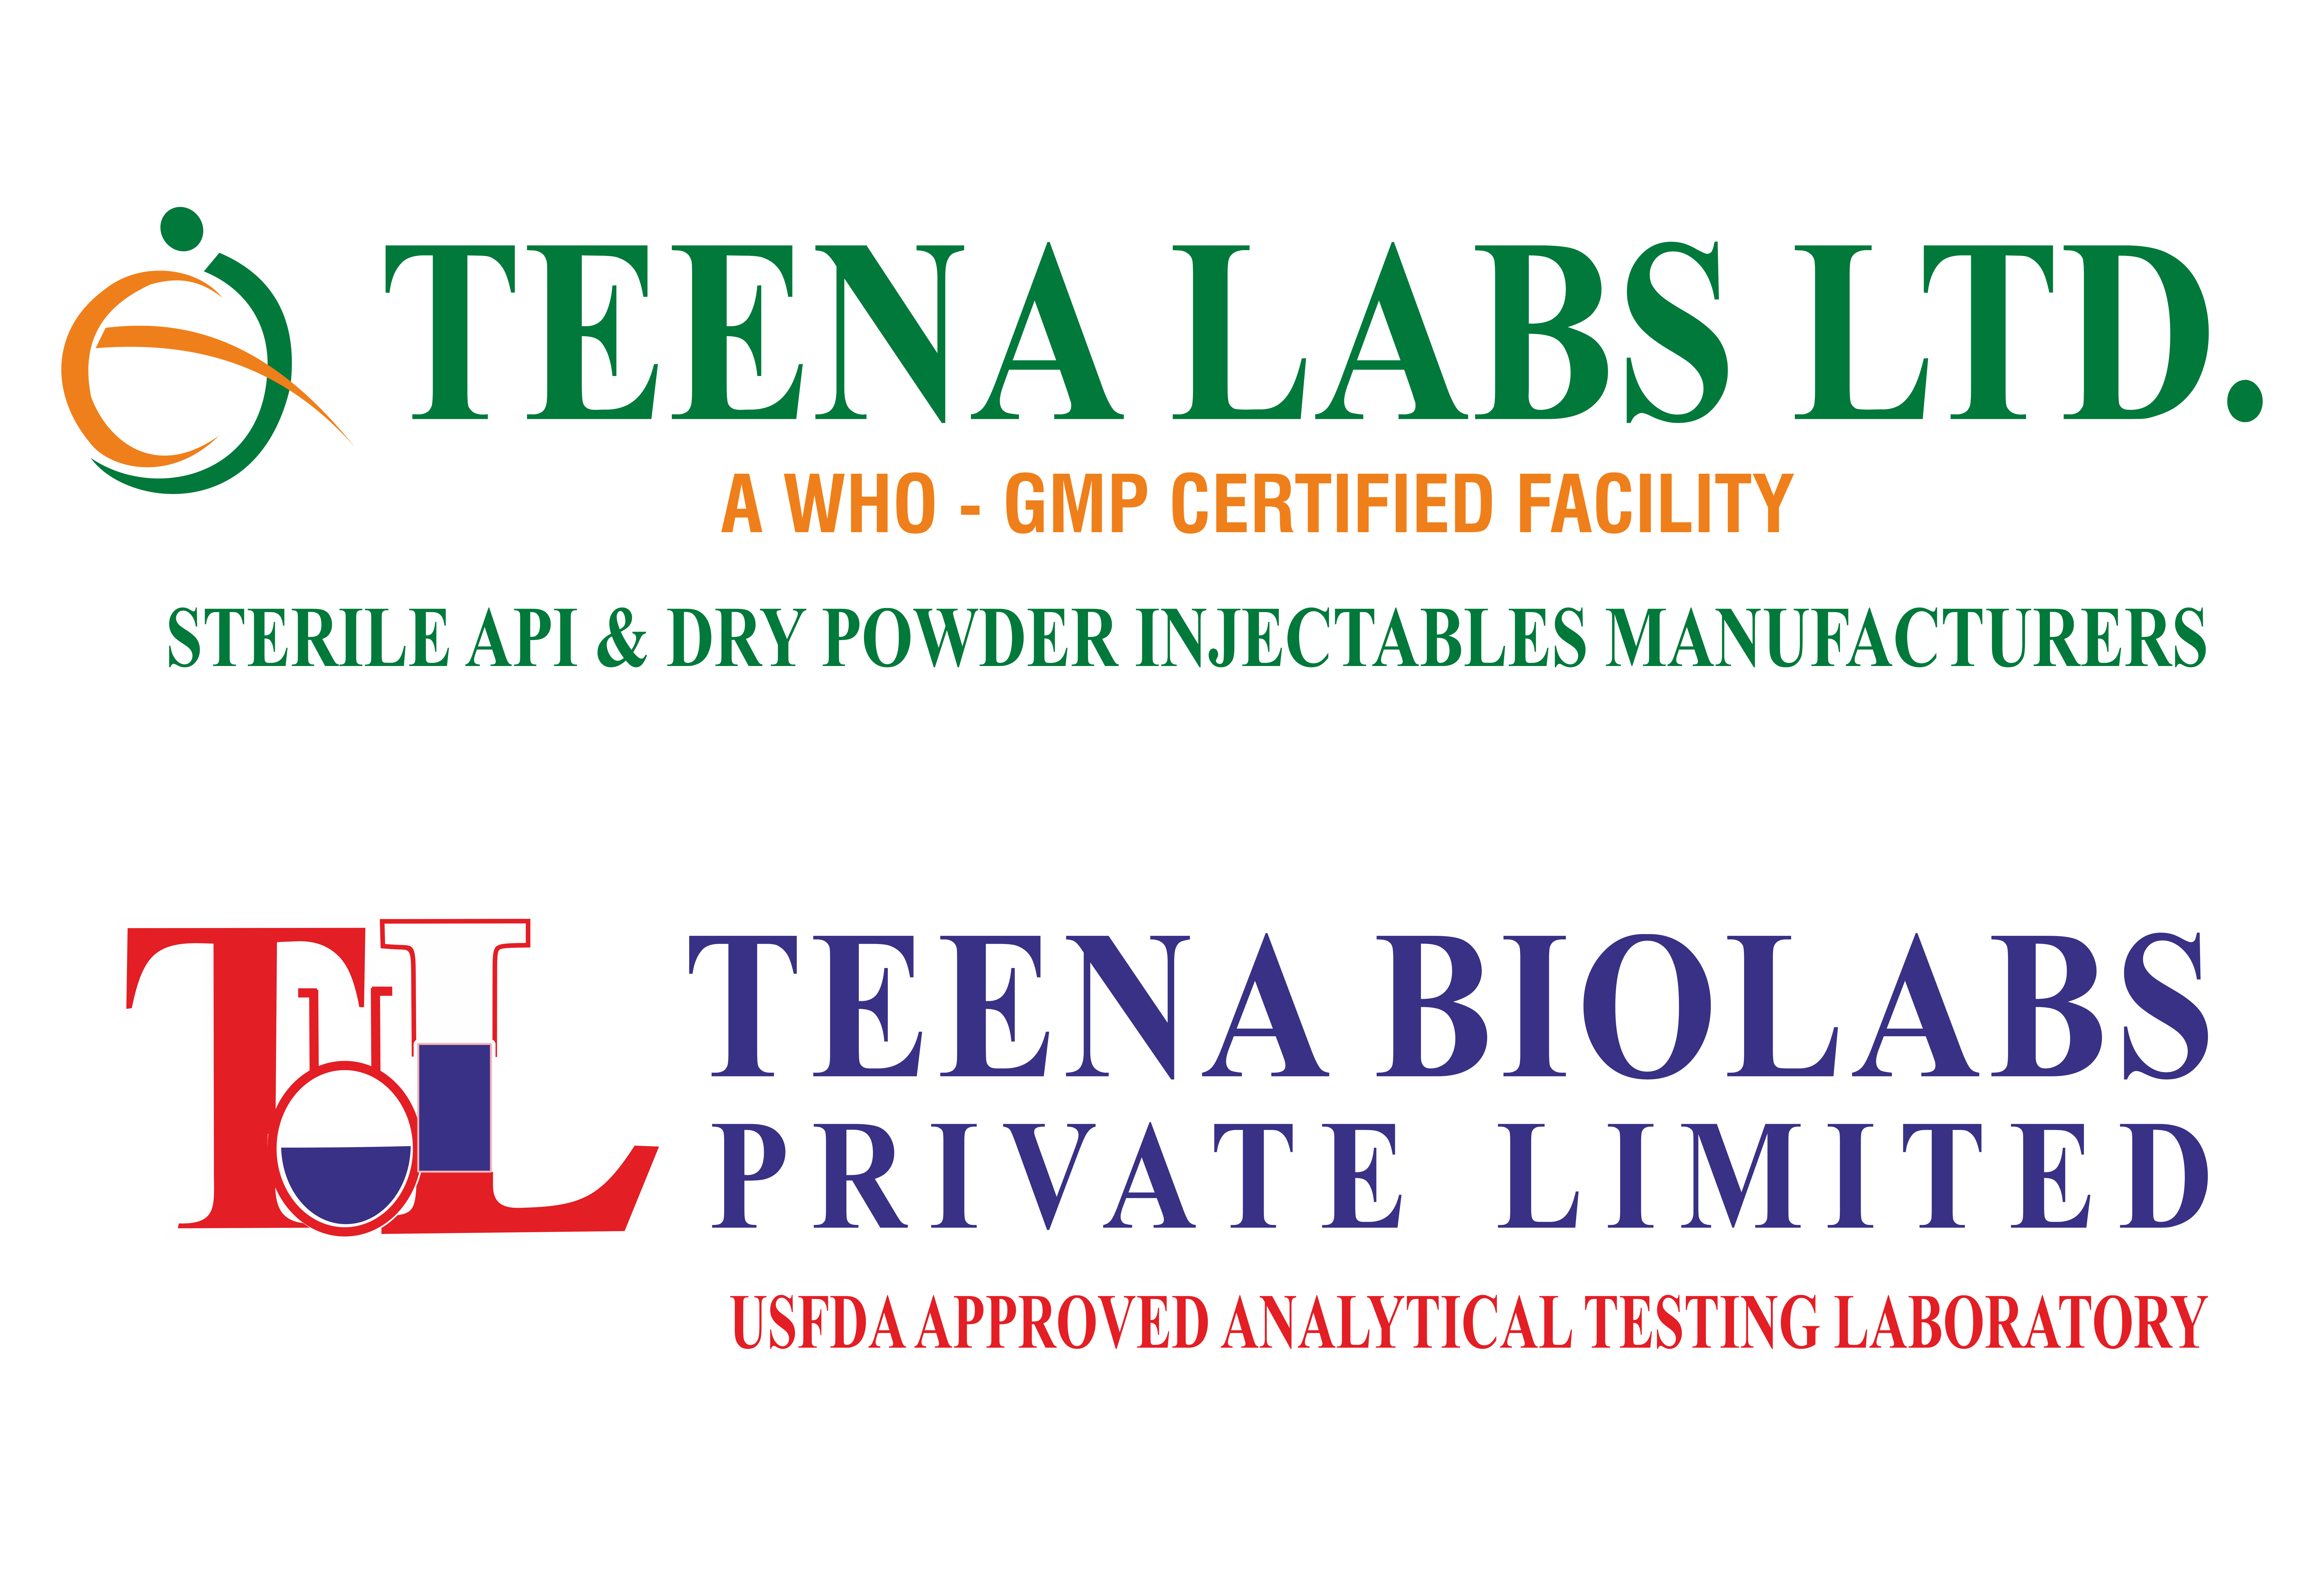 Teena Labs Ltd